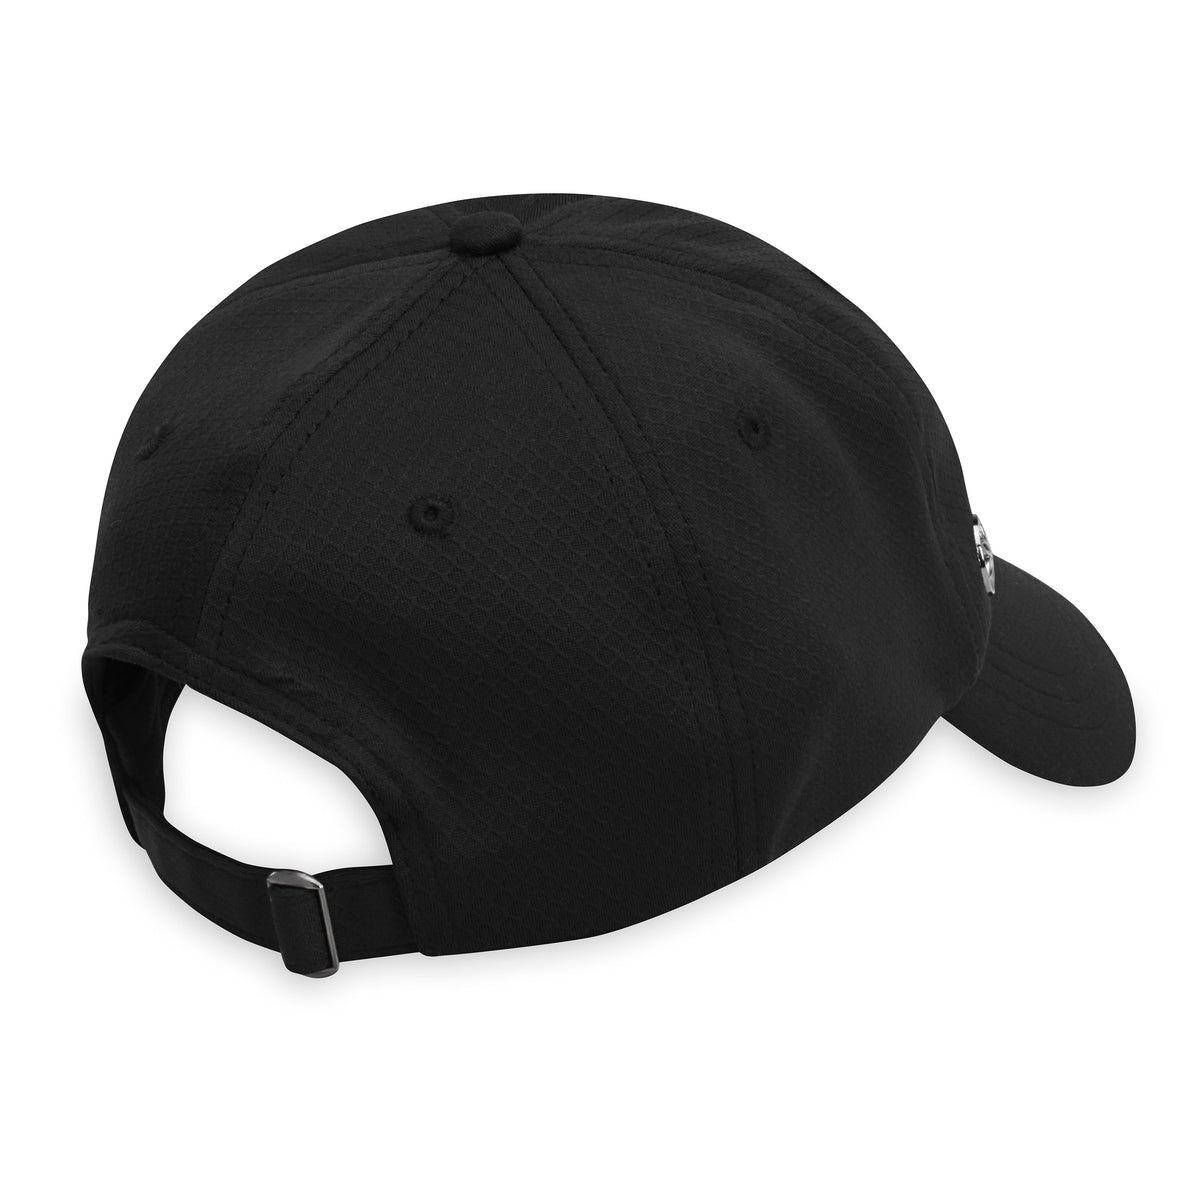 Gaiam Classic Fitness Hat - Leopard Black : Target